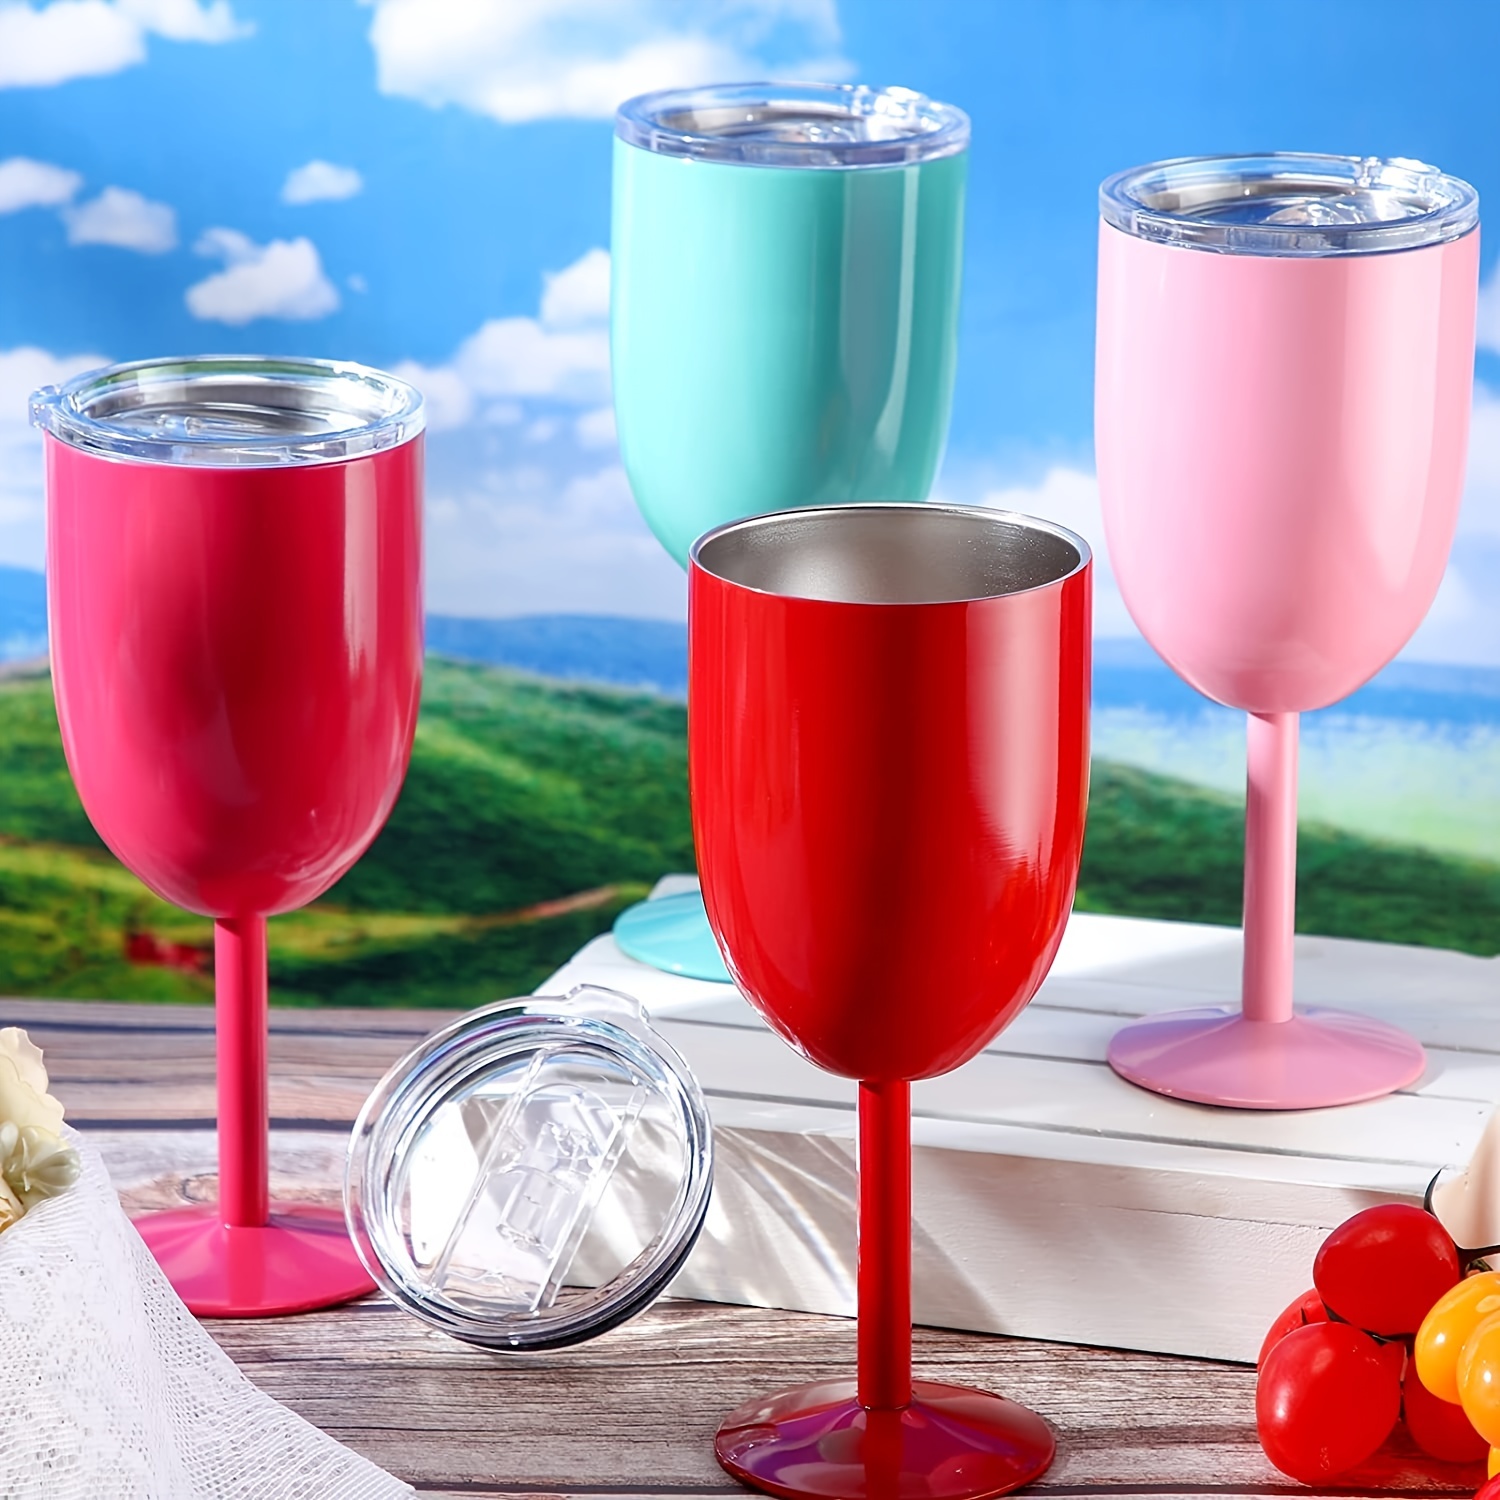 https://img.kwcdn.com/product/stainless-steel-wine-glasses-cups/d69d2f15w98k18-657643bd/Fancyalgo/VirtualModelMatting/bc79043272e4d4769e5d3e8f6e3256e2.jpg